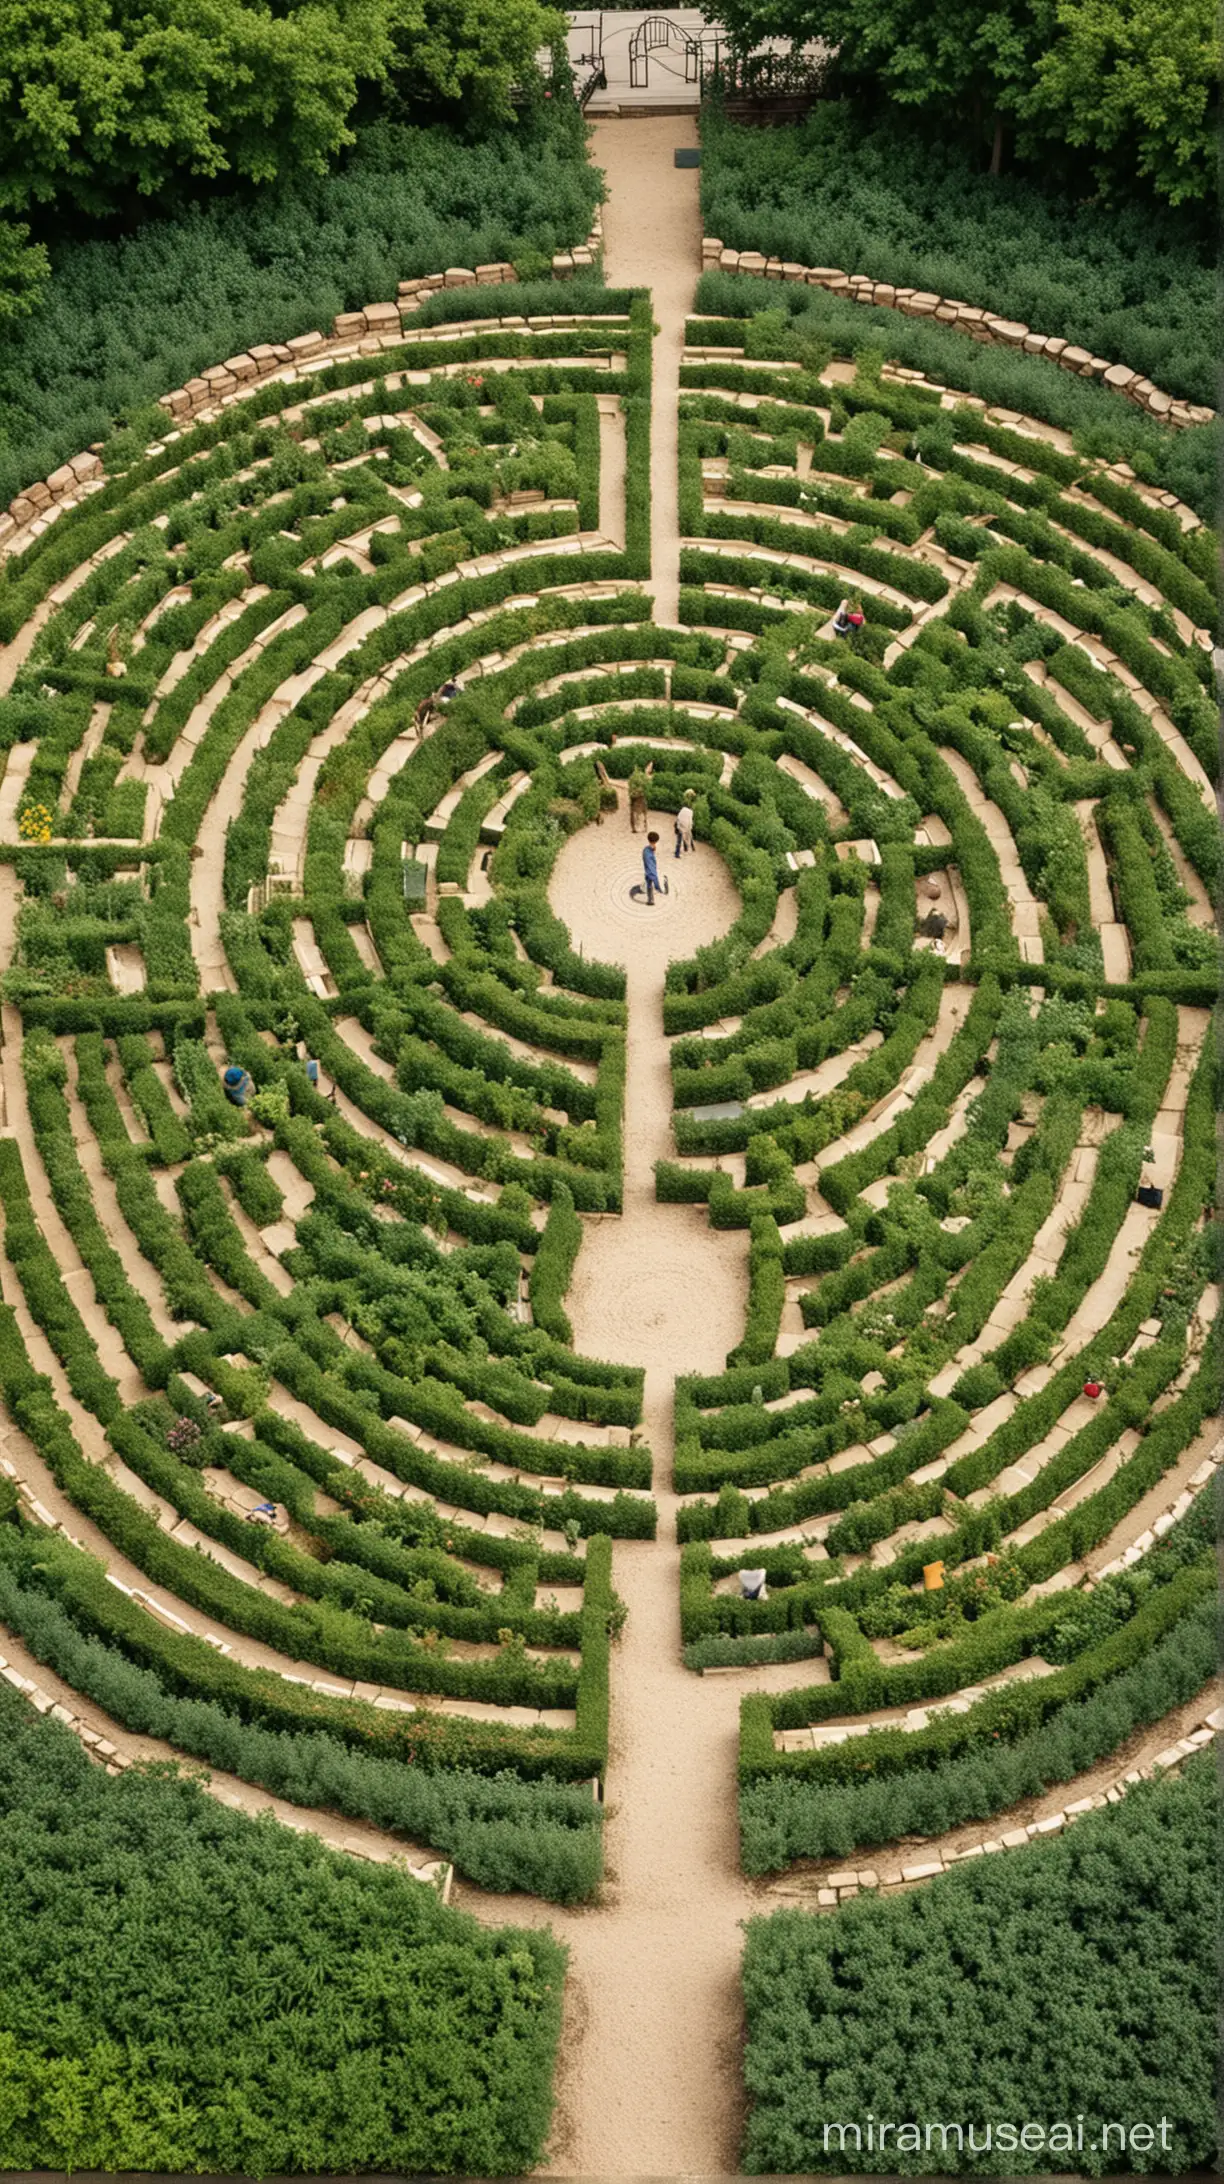 create a labyrinth-shaped garden
